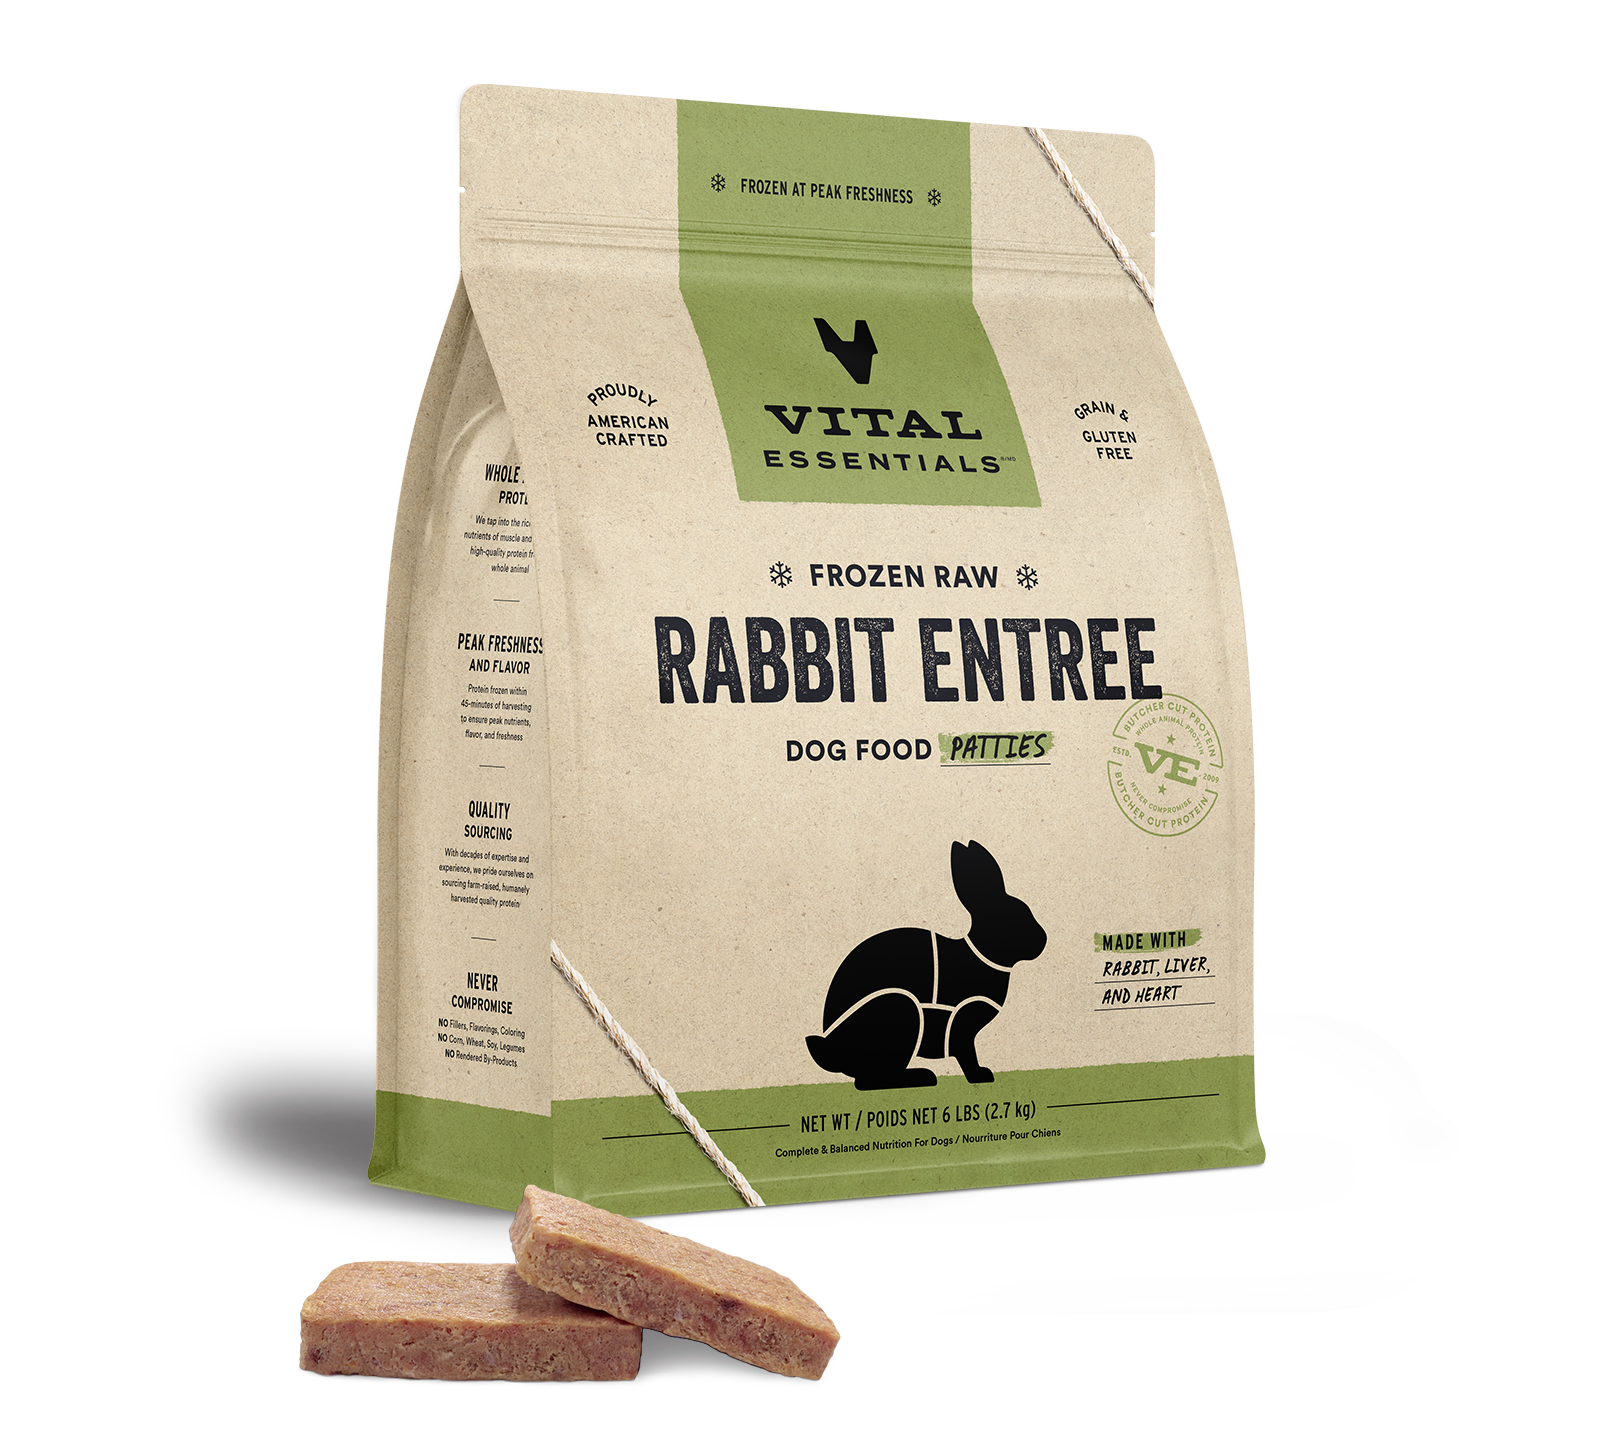 Vital Essentials Frozen Raw Rabbit Entree Dog Food Patties, 6 lbs - Health/First Aid